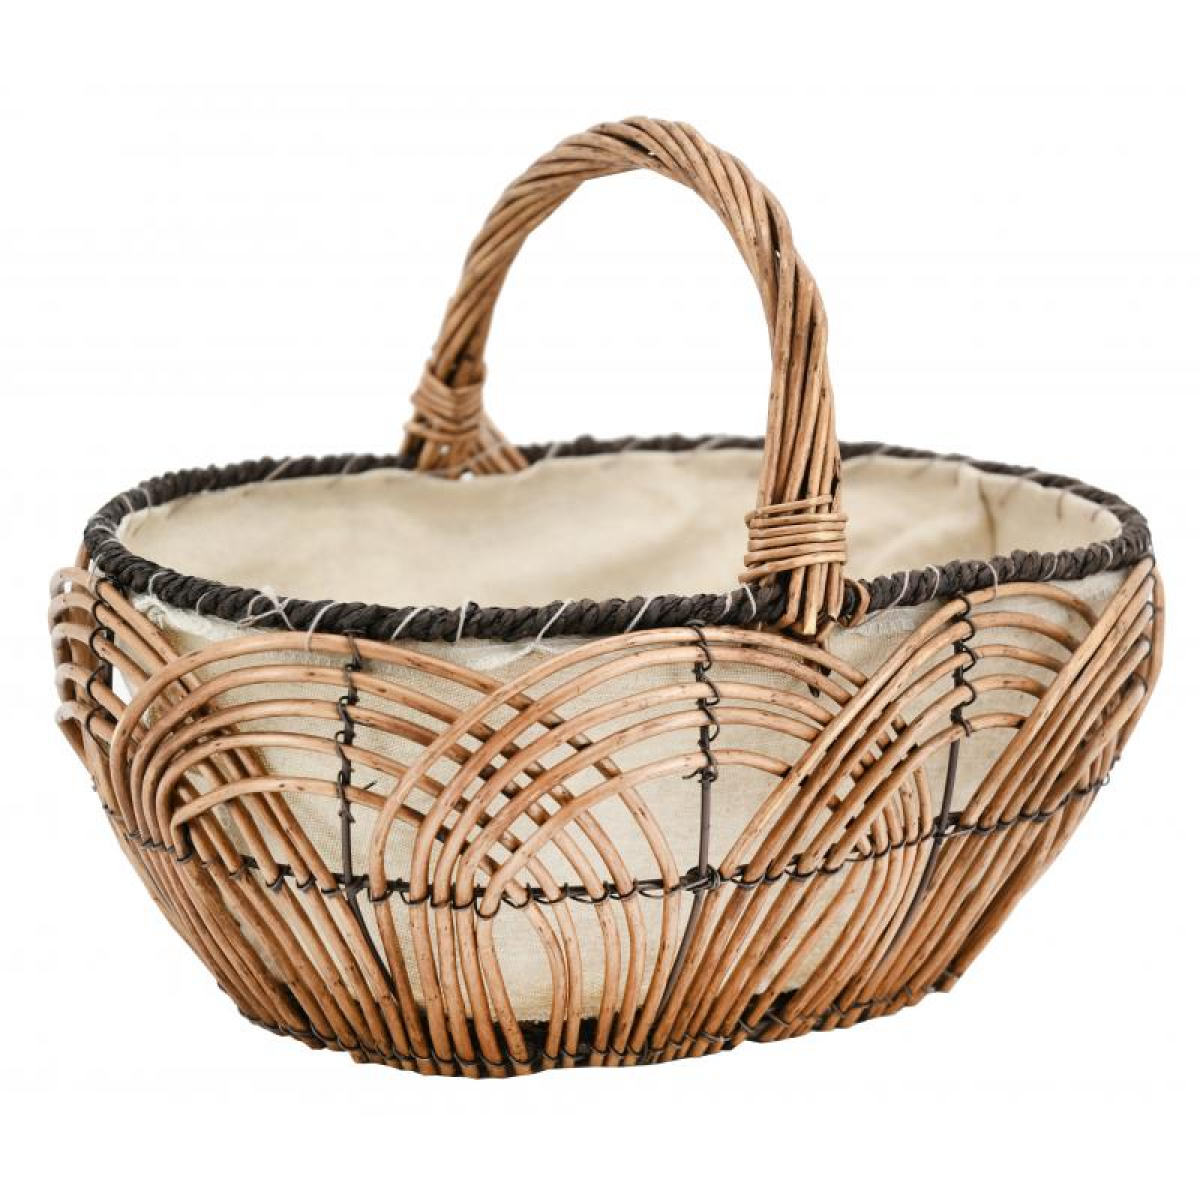 Lace-up basket